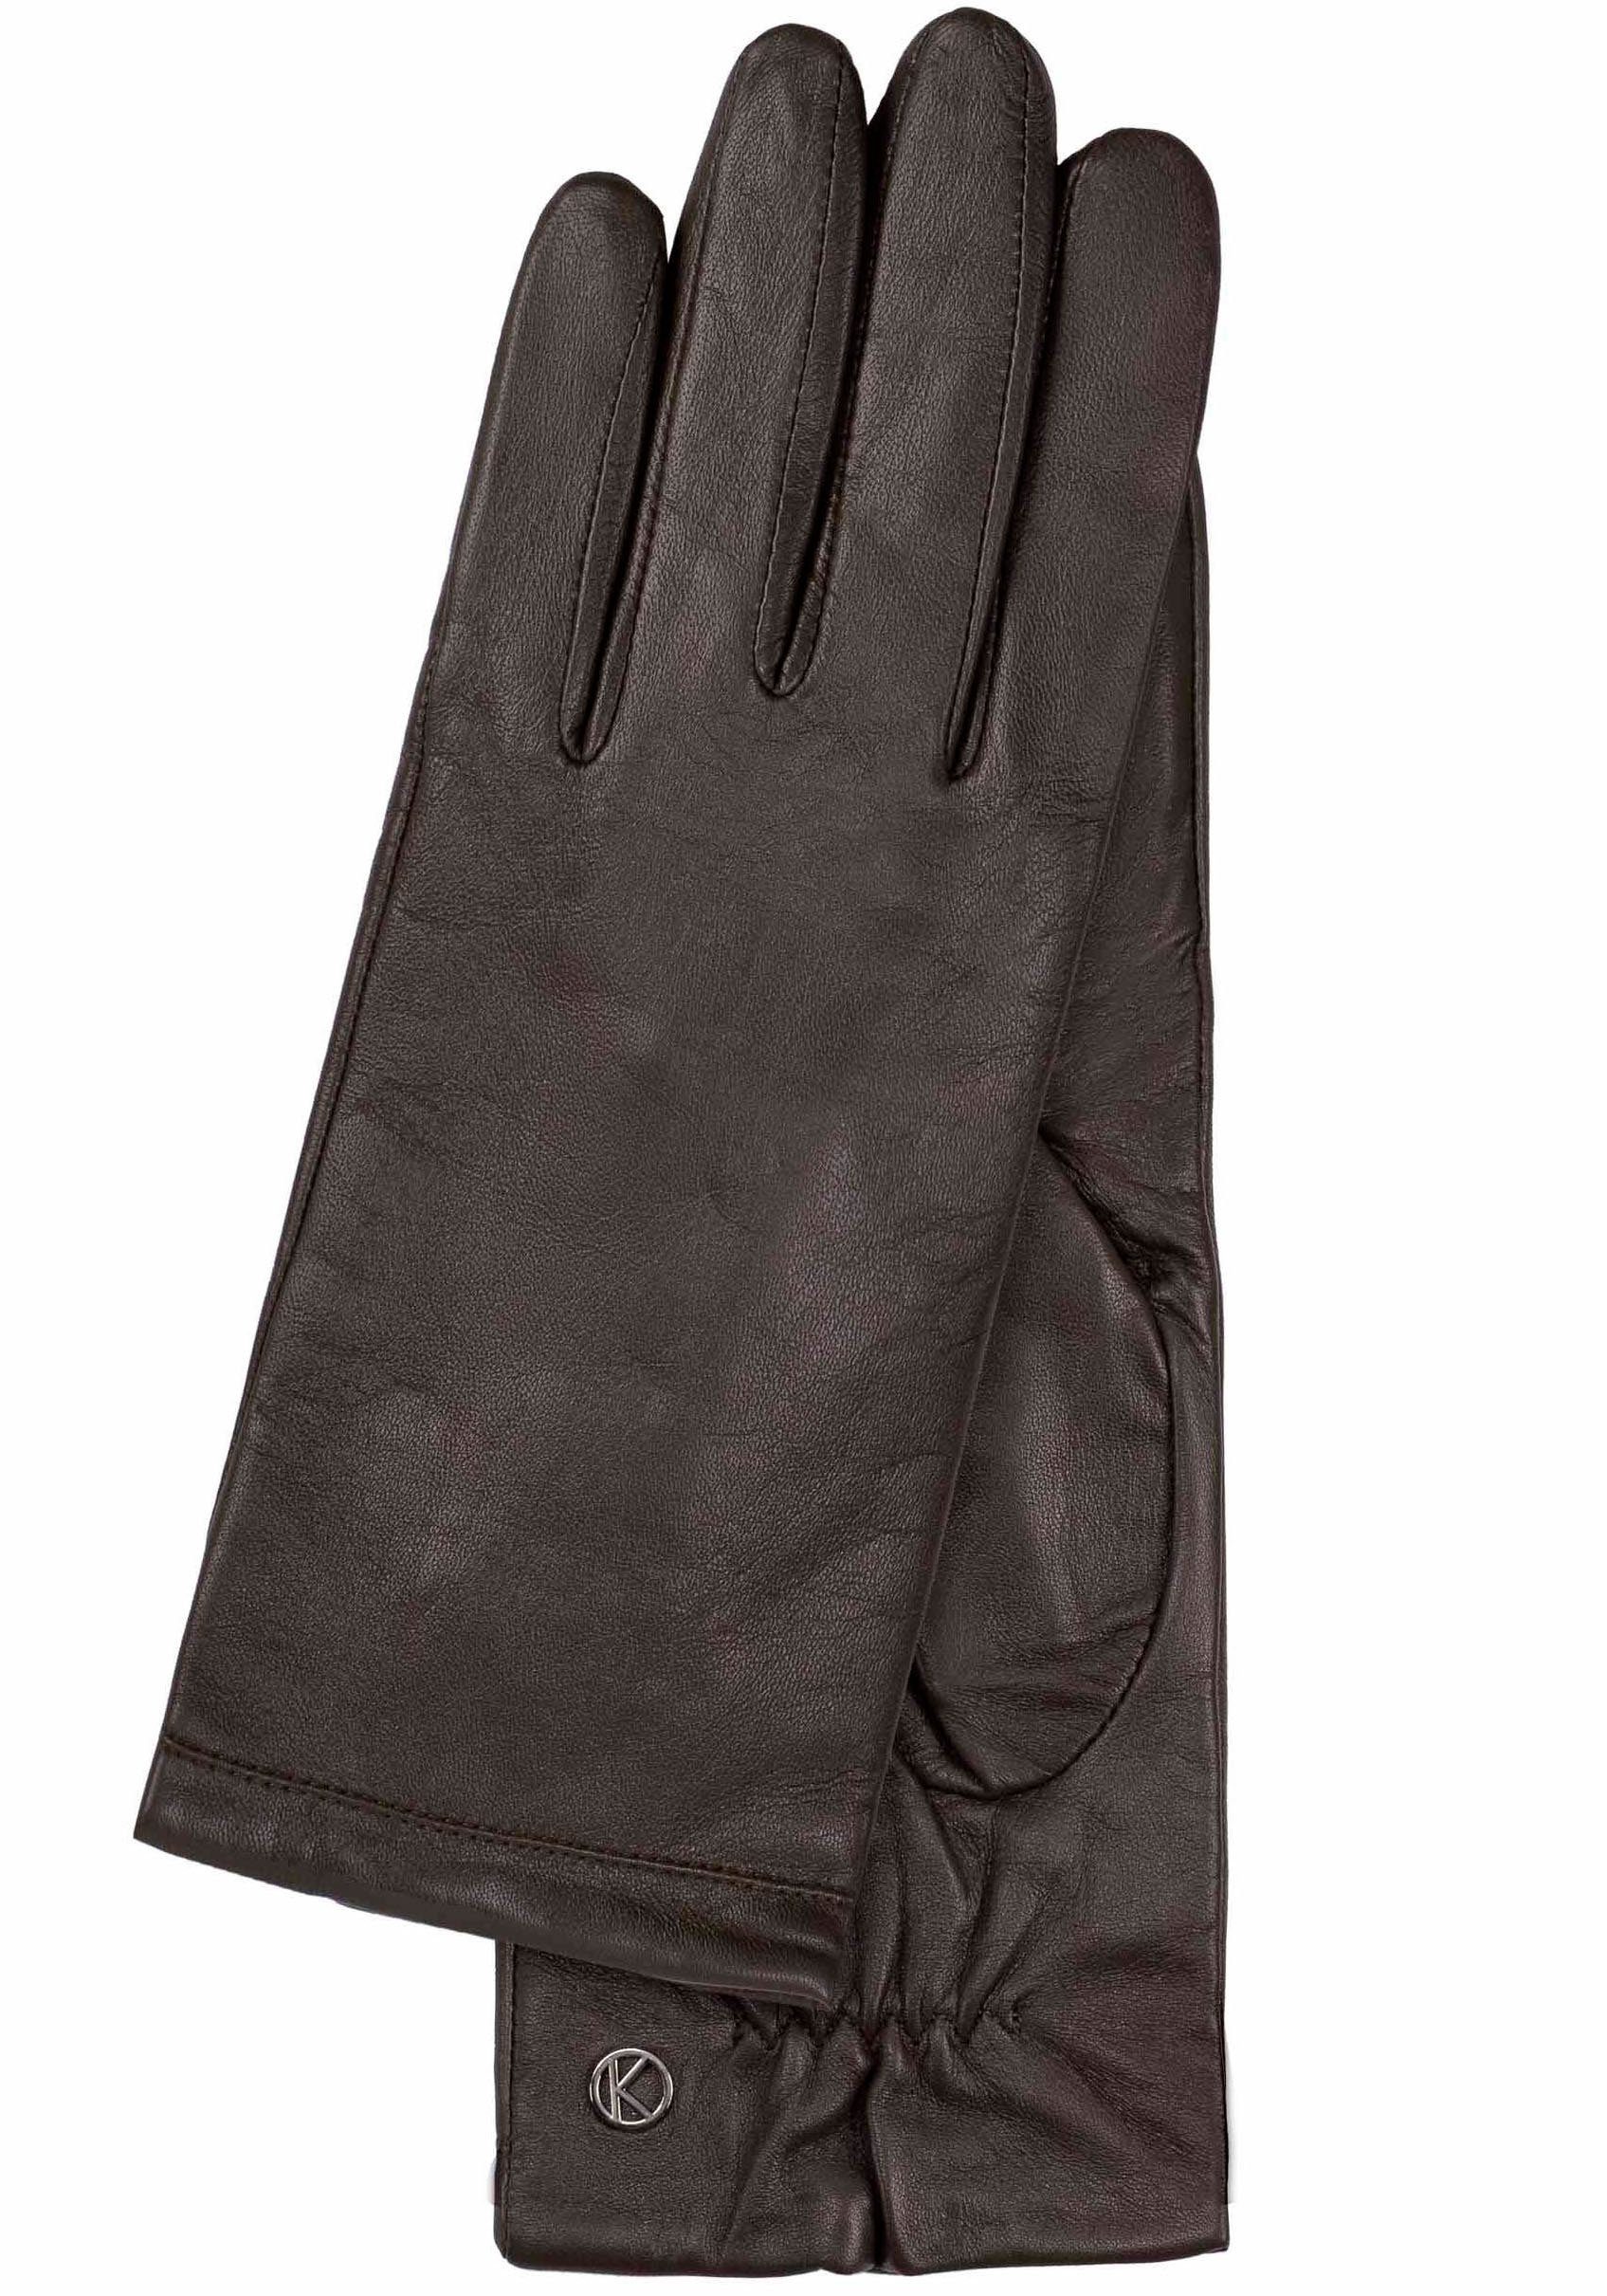 KESSLER Lederhandschuhe Touchfunktion, Chelsea Passform, olive schlanke Zierbiesen